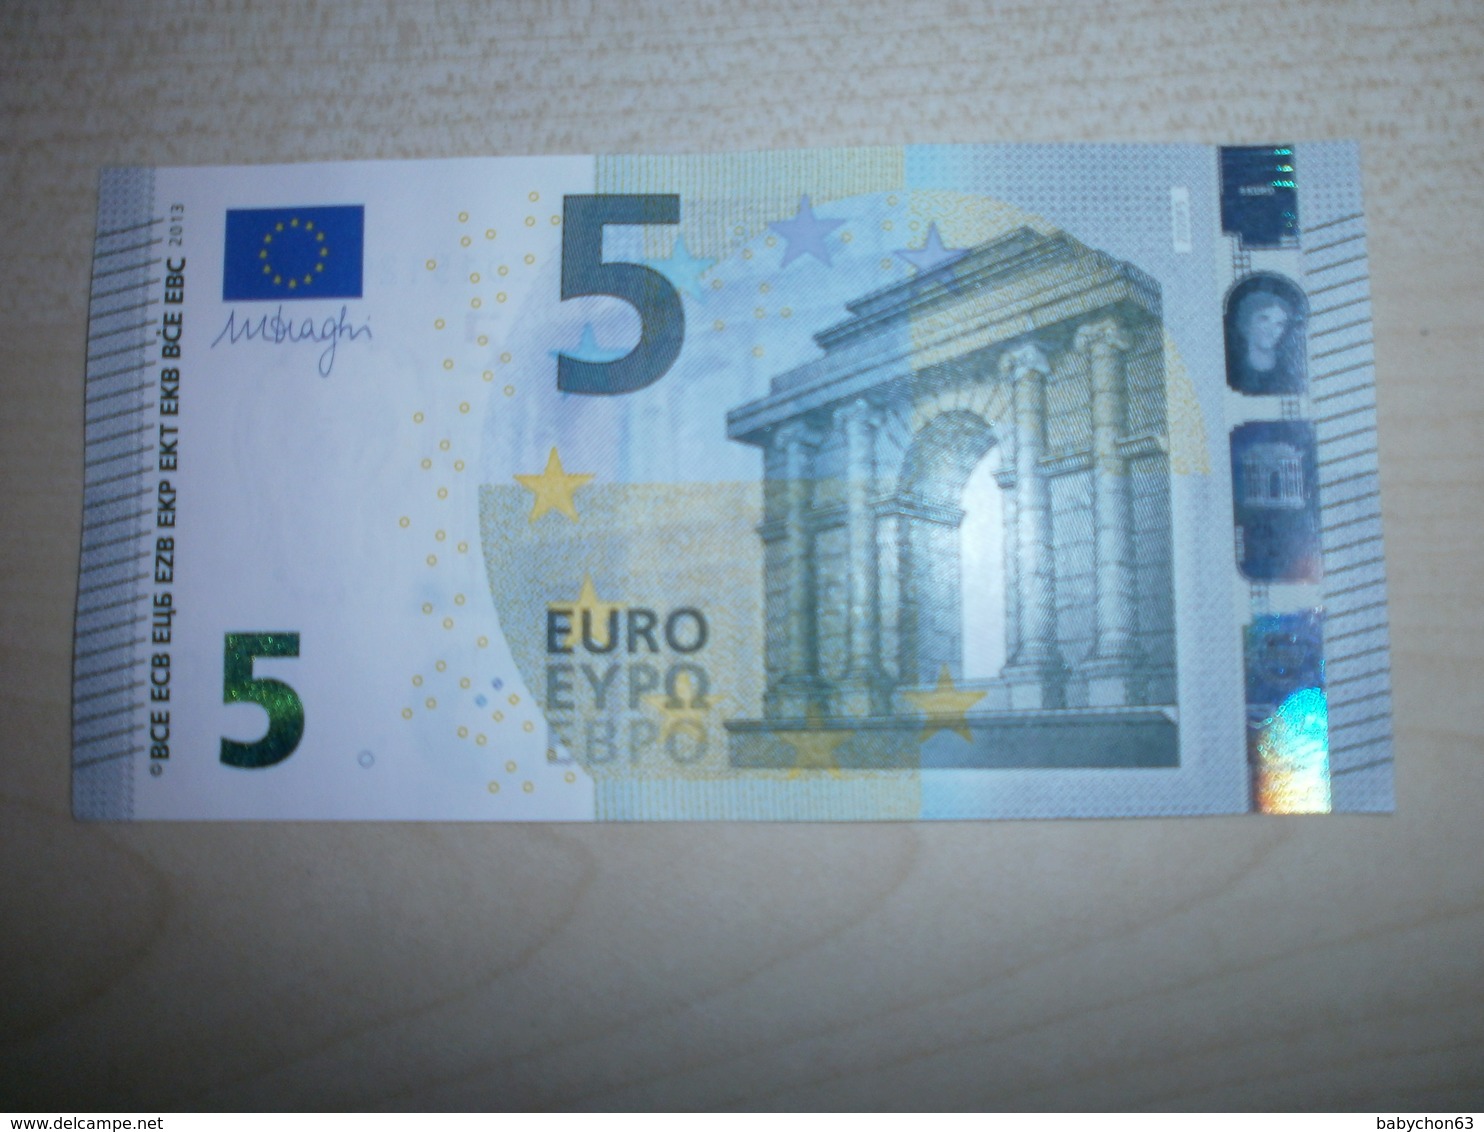 5 EUROS (Z Z020 F5) - 5 Euro